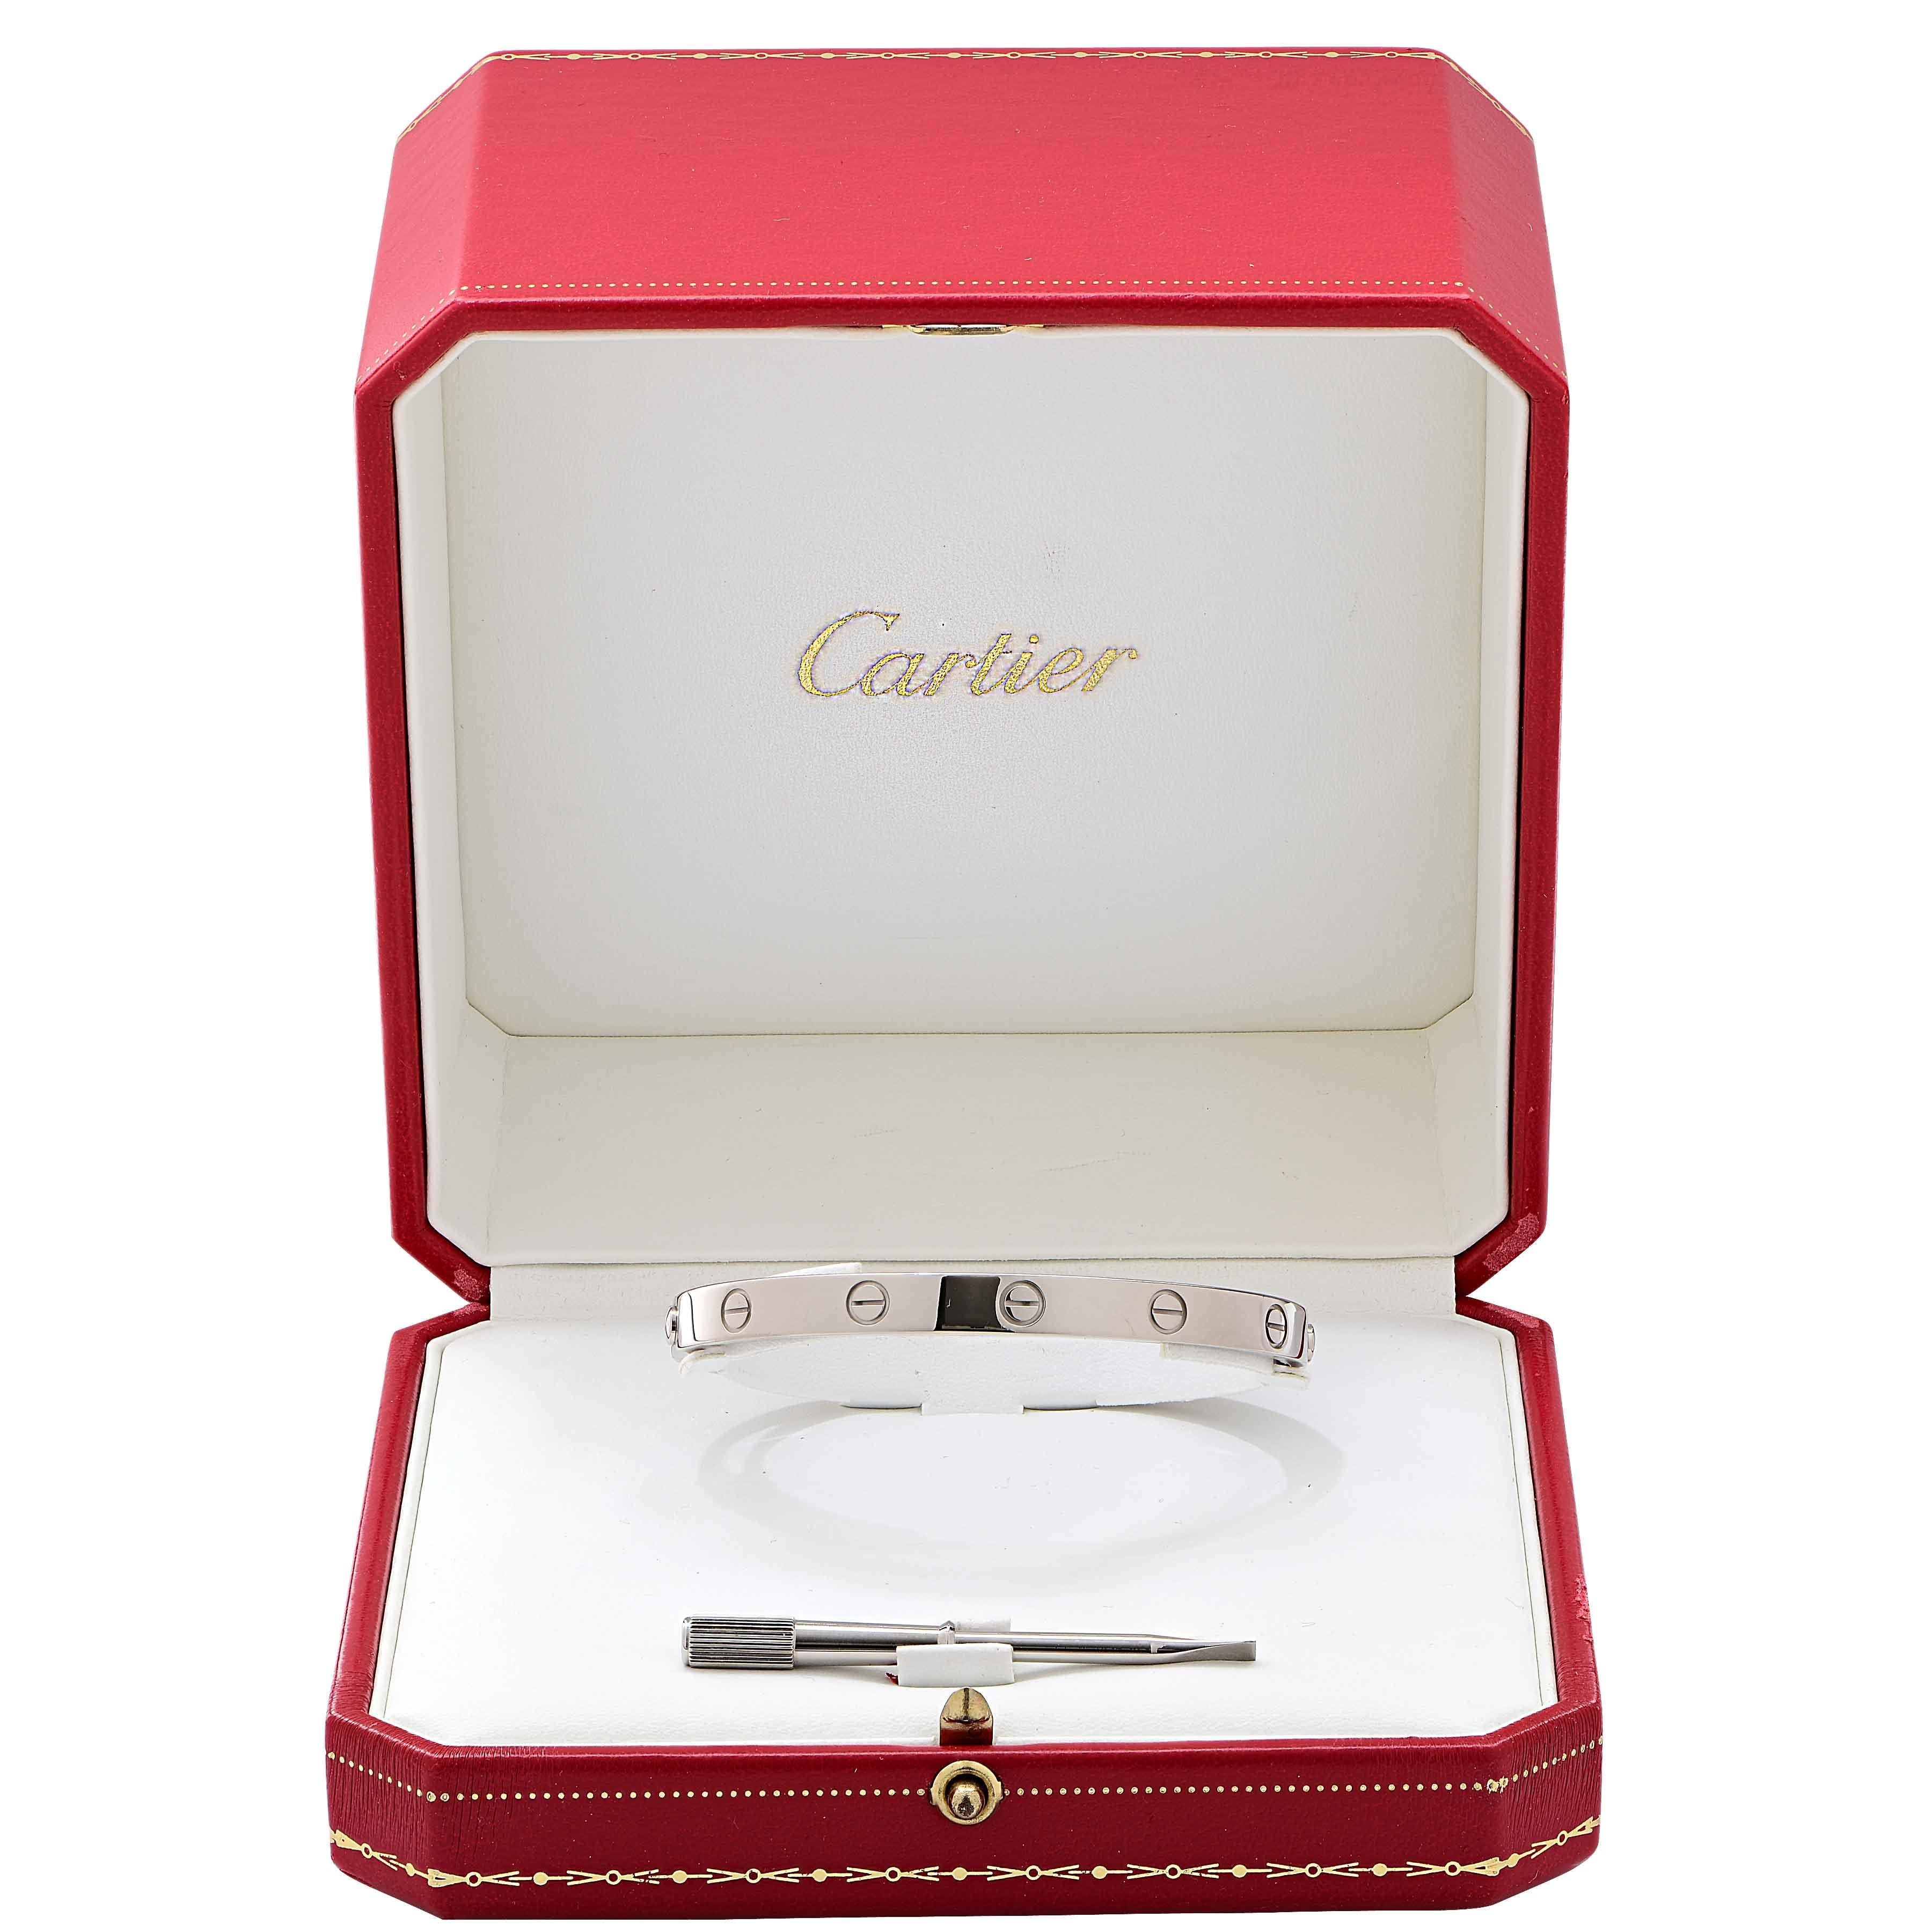 Cartier Love Bracelet Bangle in 18 Karat White Gold Circa 1993 Original Box Included.
Size 18
Metal Type: 18 Karat White Gold
Metal Weight: 22.3 Grams